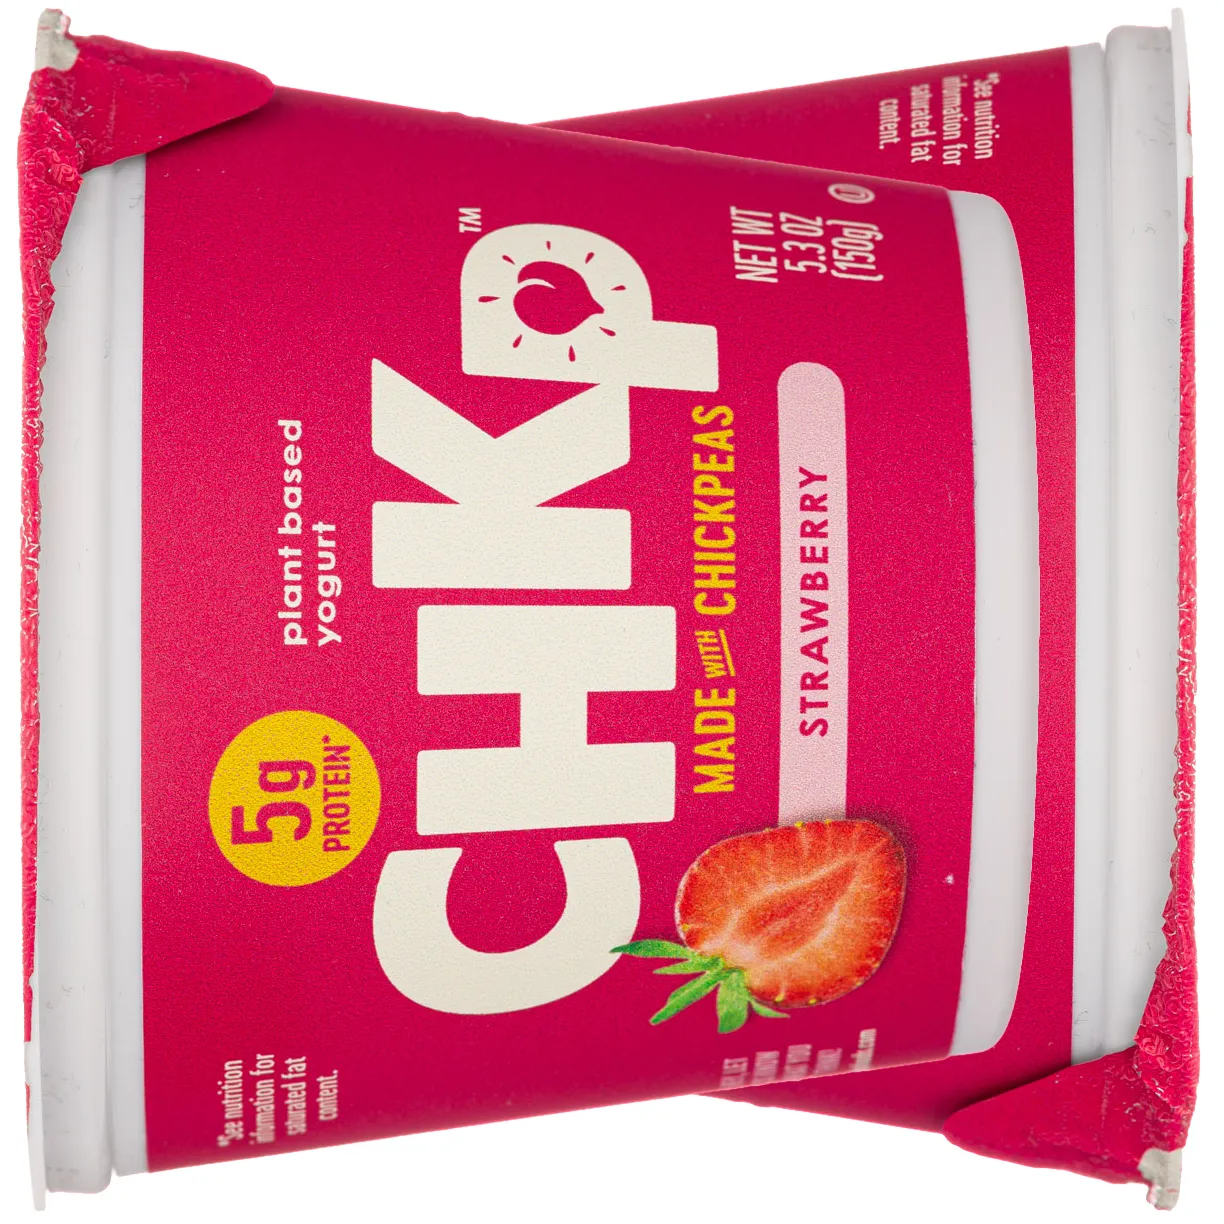 Free Chkp Foods Plant-Based Yogurt